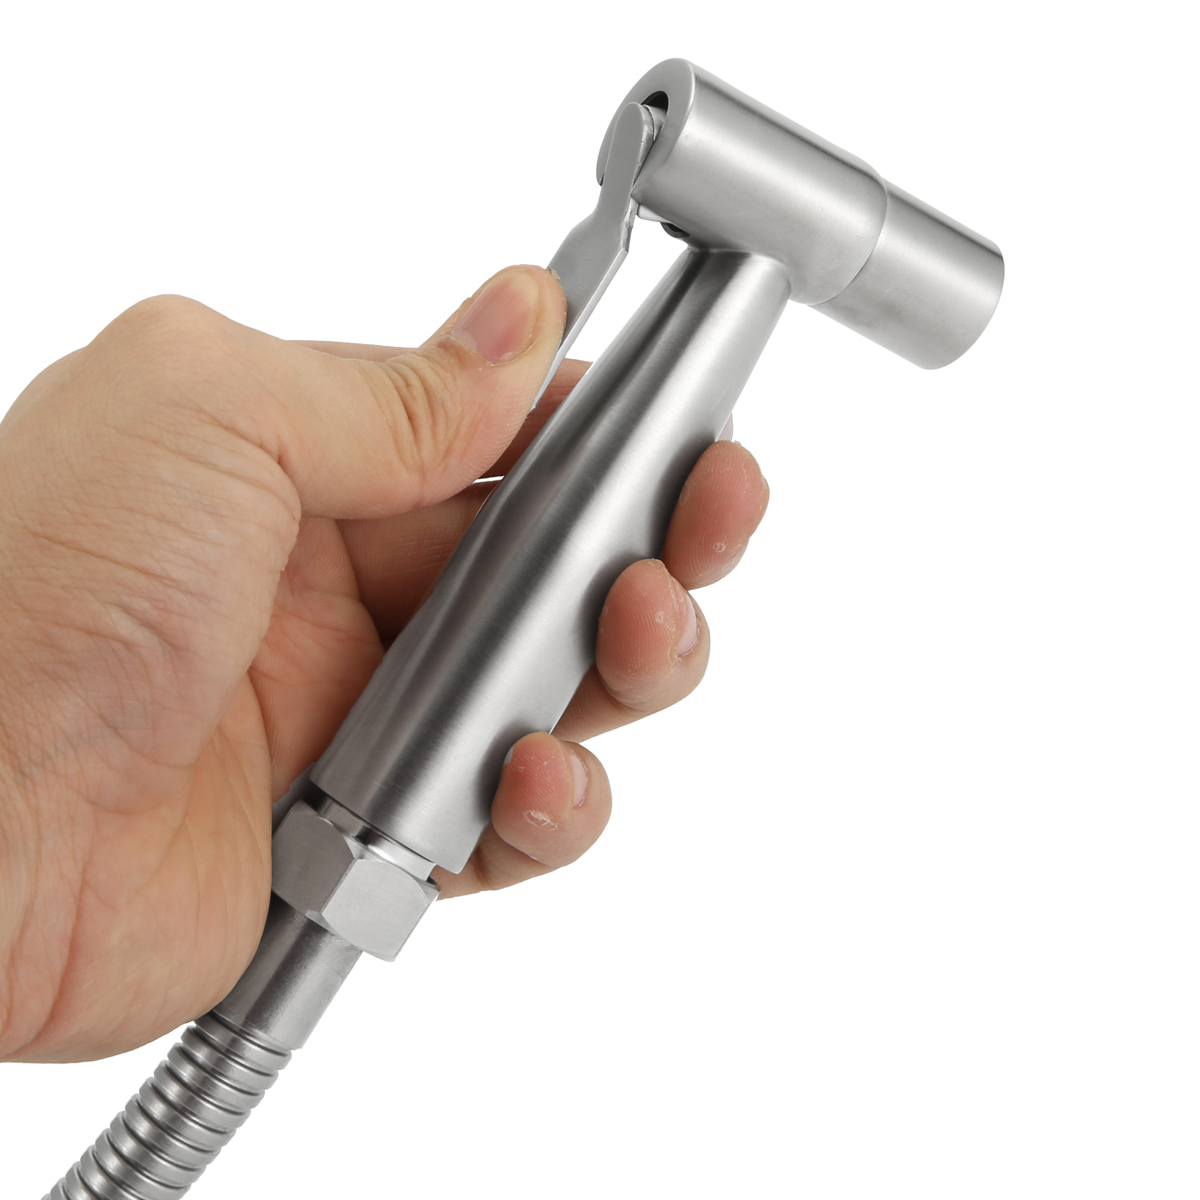 Brushed-Stainless-Toilet-Handheld-Bidet-Spray--Douche-Shower-Set-Toilet-Shattaf-Sprayer-Douche-Kit-B-1270713